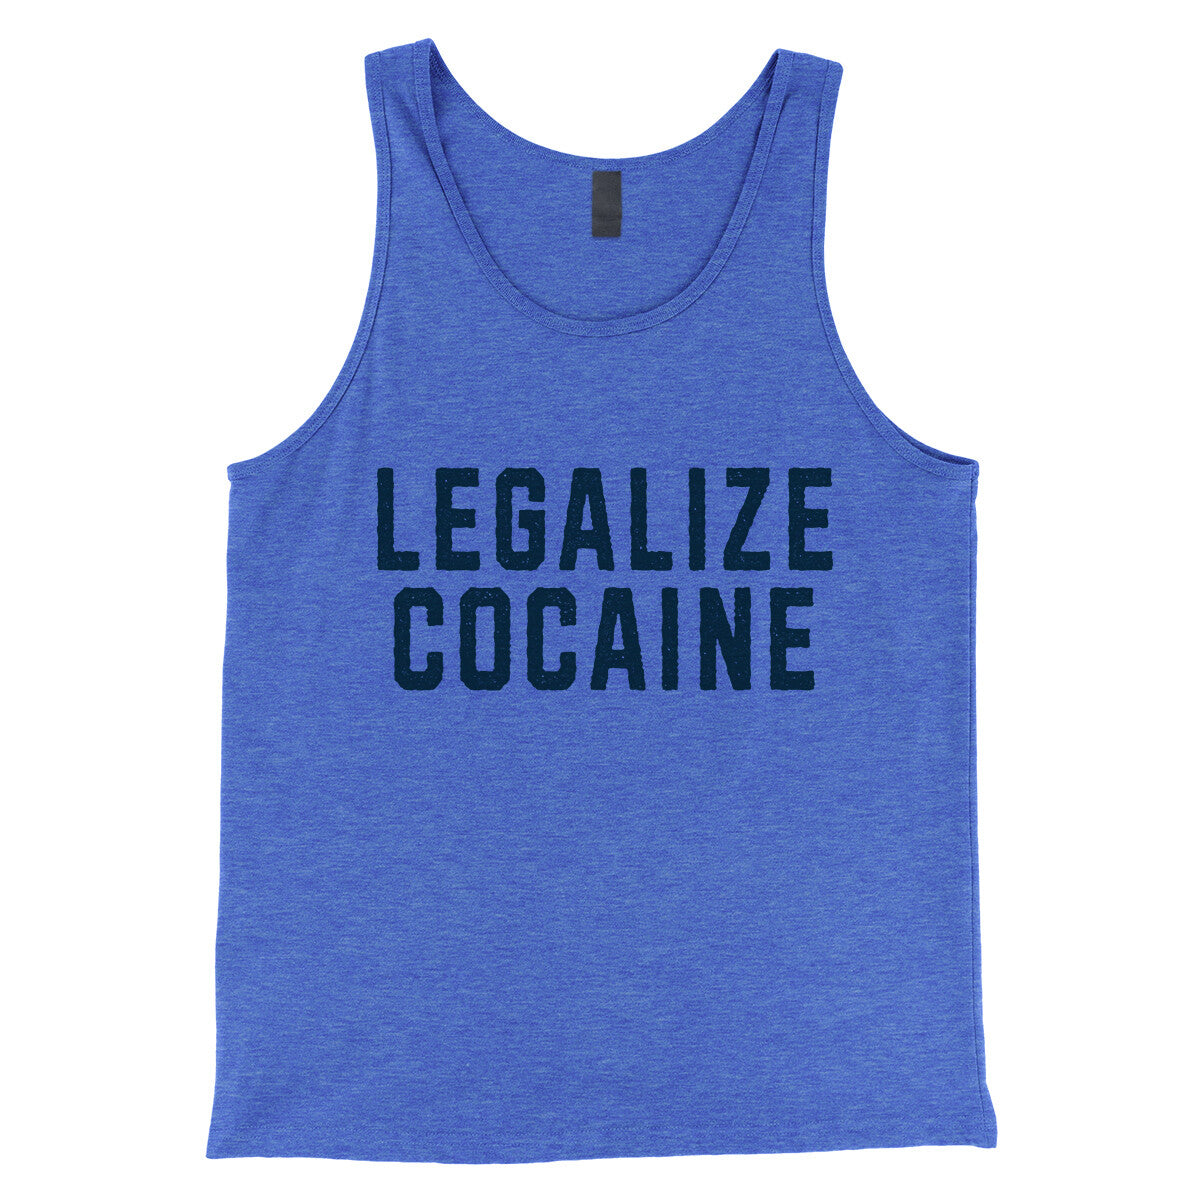 Legalize Cocaine in True Royal TriBlend Color